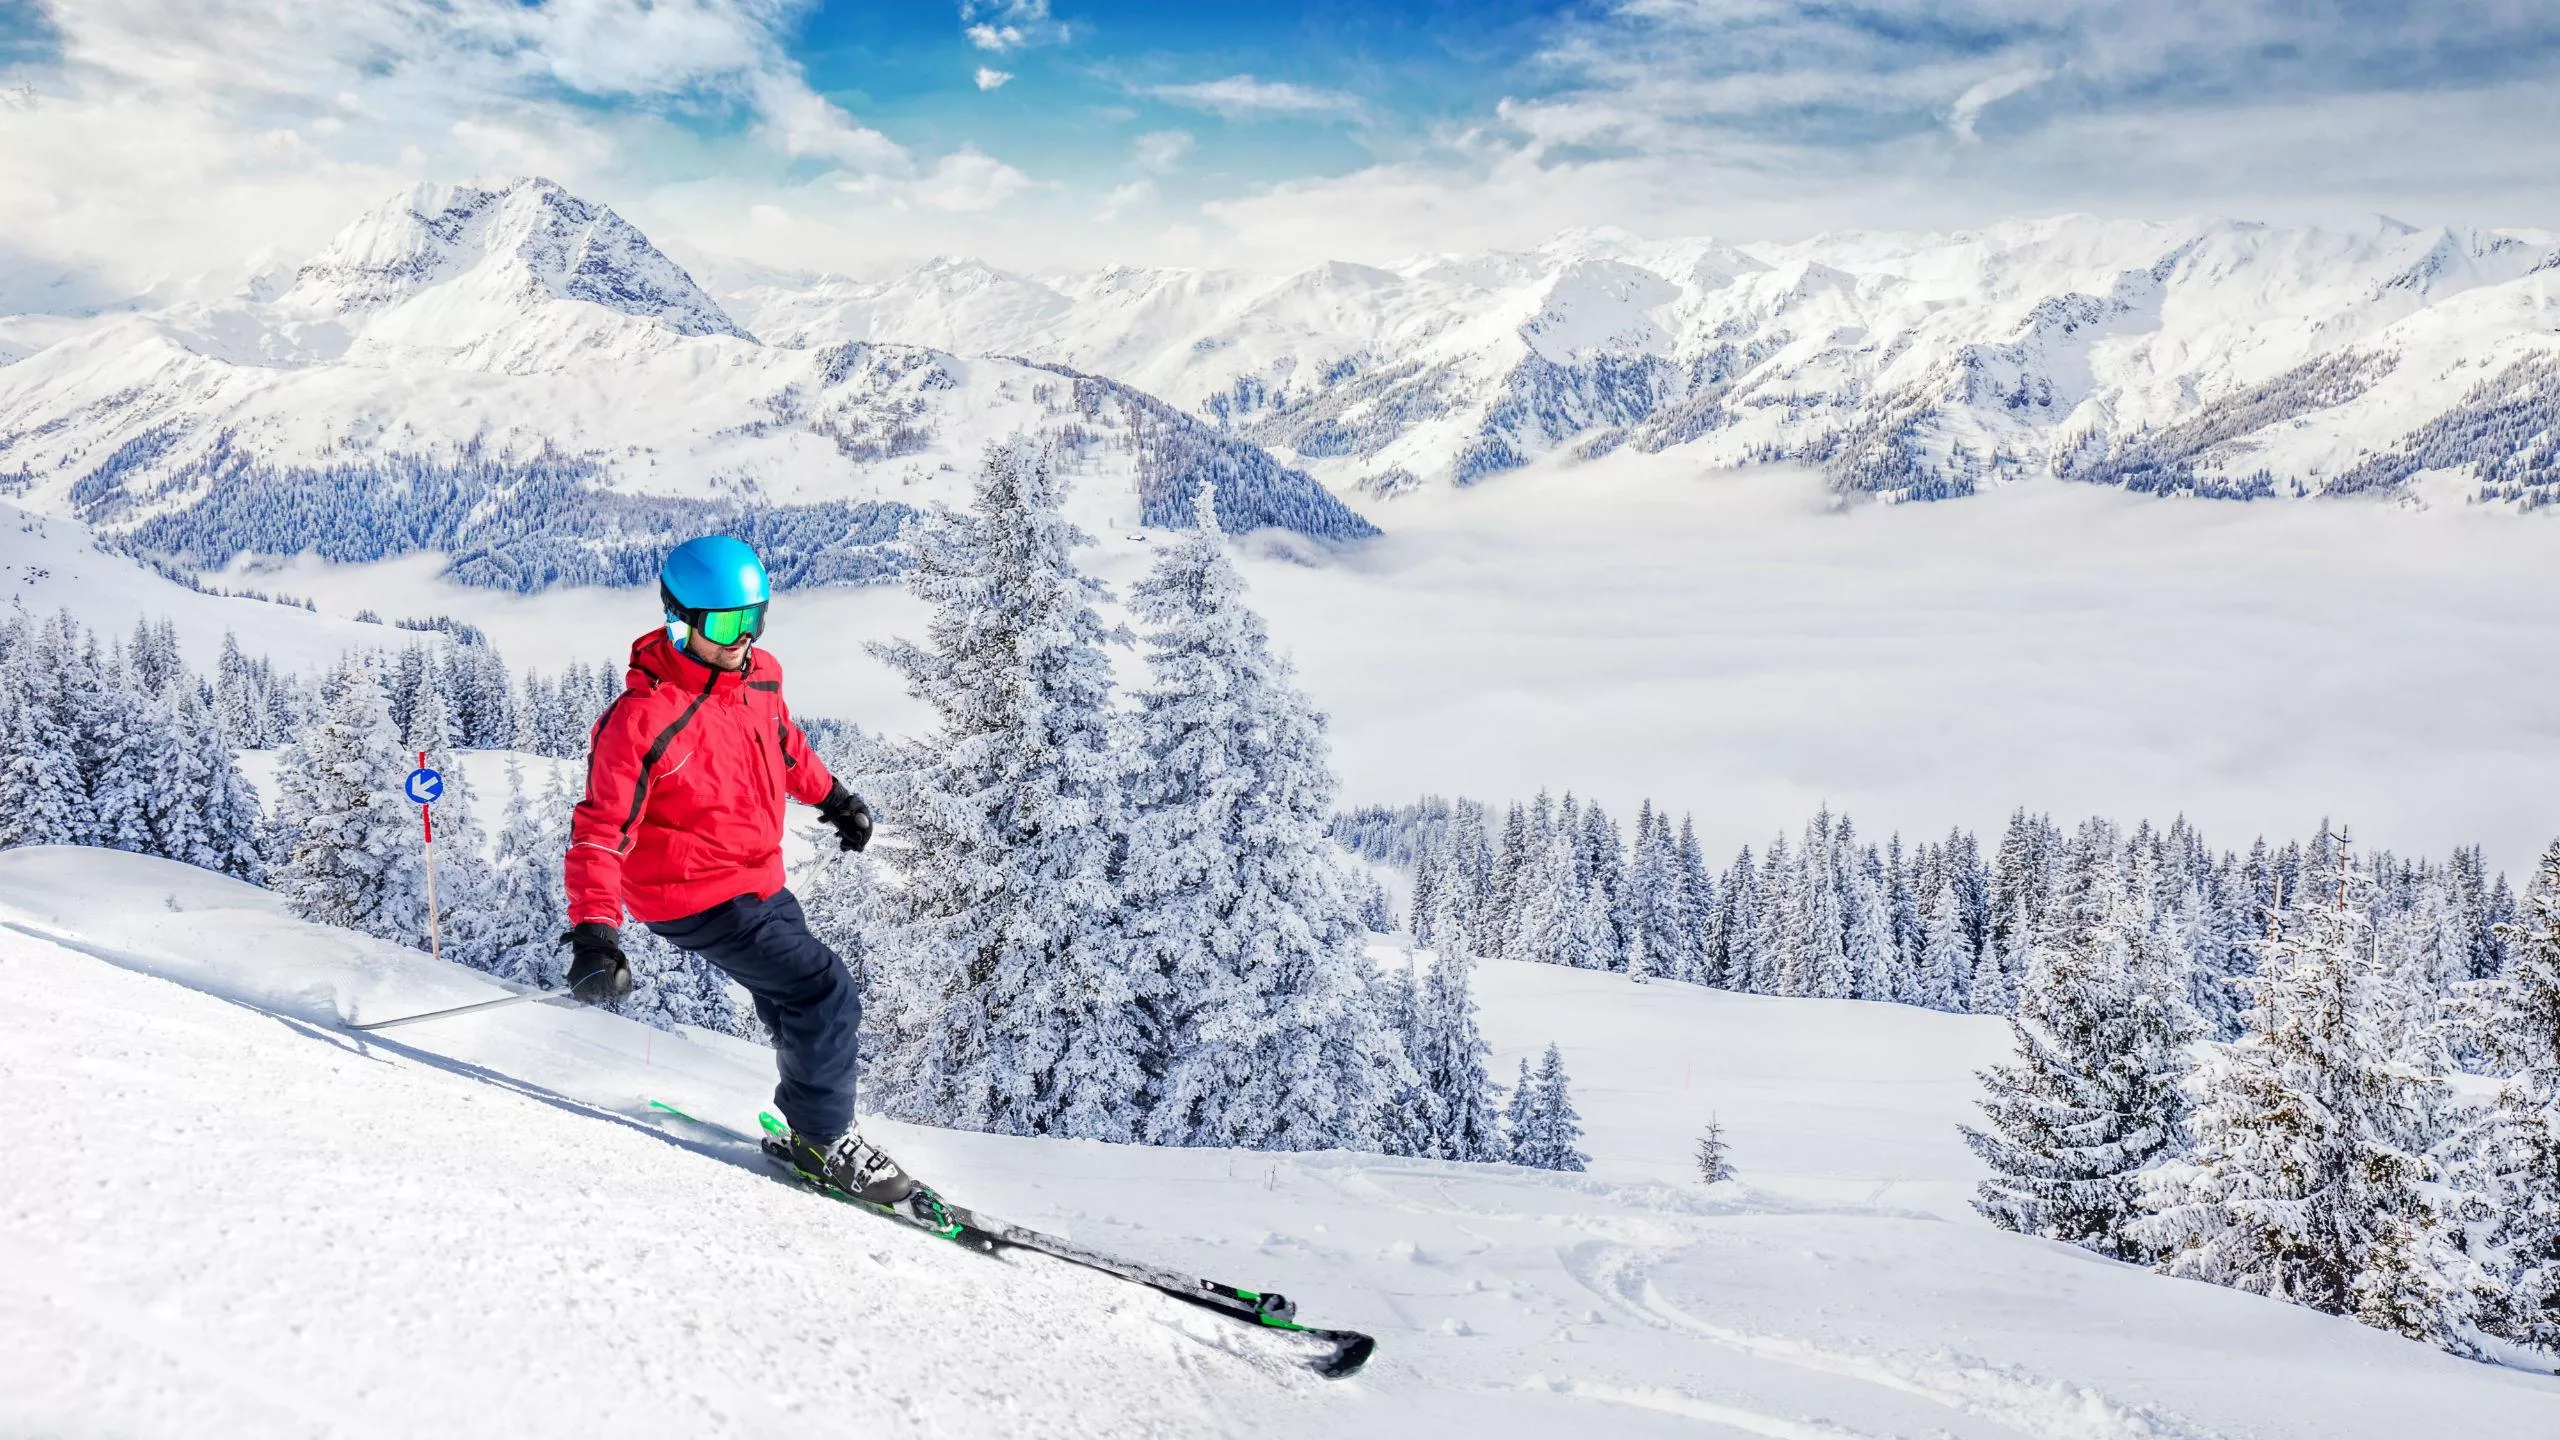 SkiTown - Ski School Rental in Poland, Europe | Snowboarding,Skiing - Rated 0.9